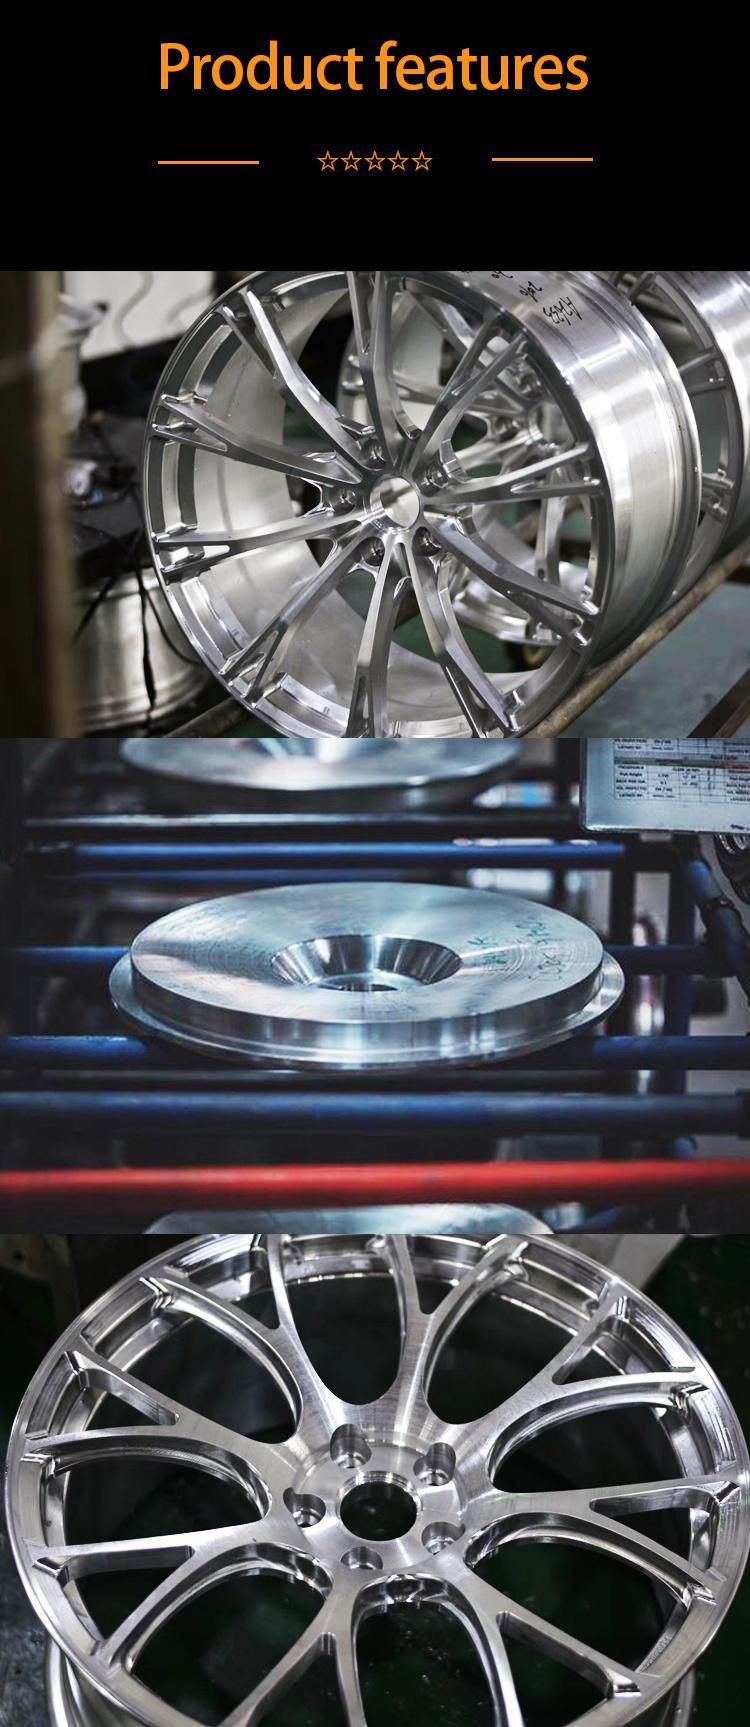   Alloy Rims Sport Aluminum Wheels for Customized Mags Rims Alloy Wheels Rims Wheels Forged Aluminum with Jaguar Gun Metal Machined Face